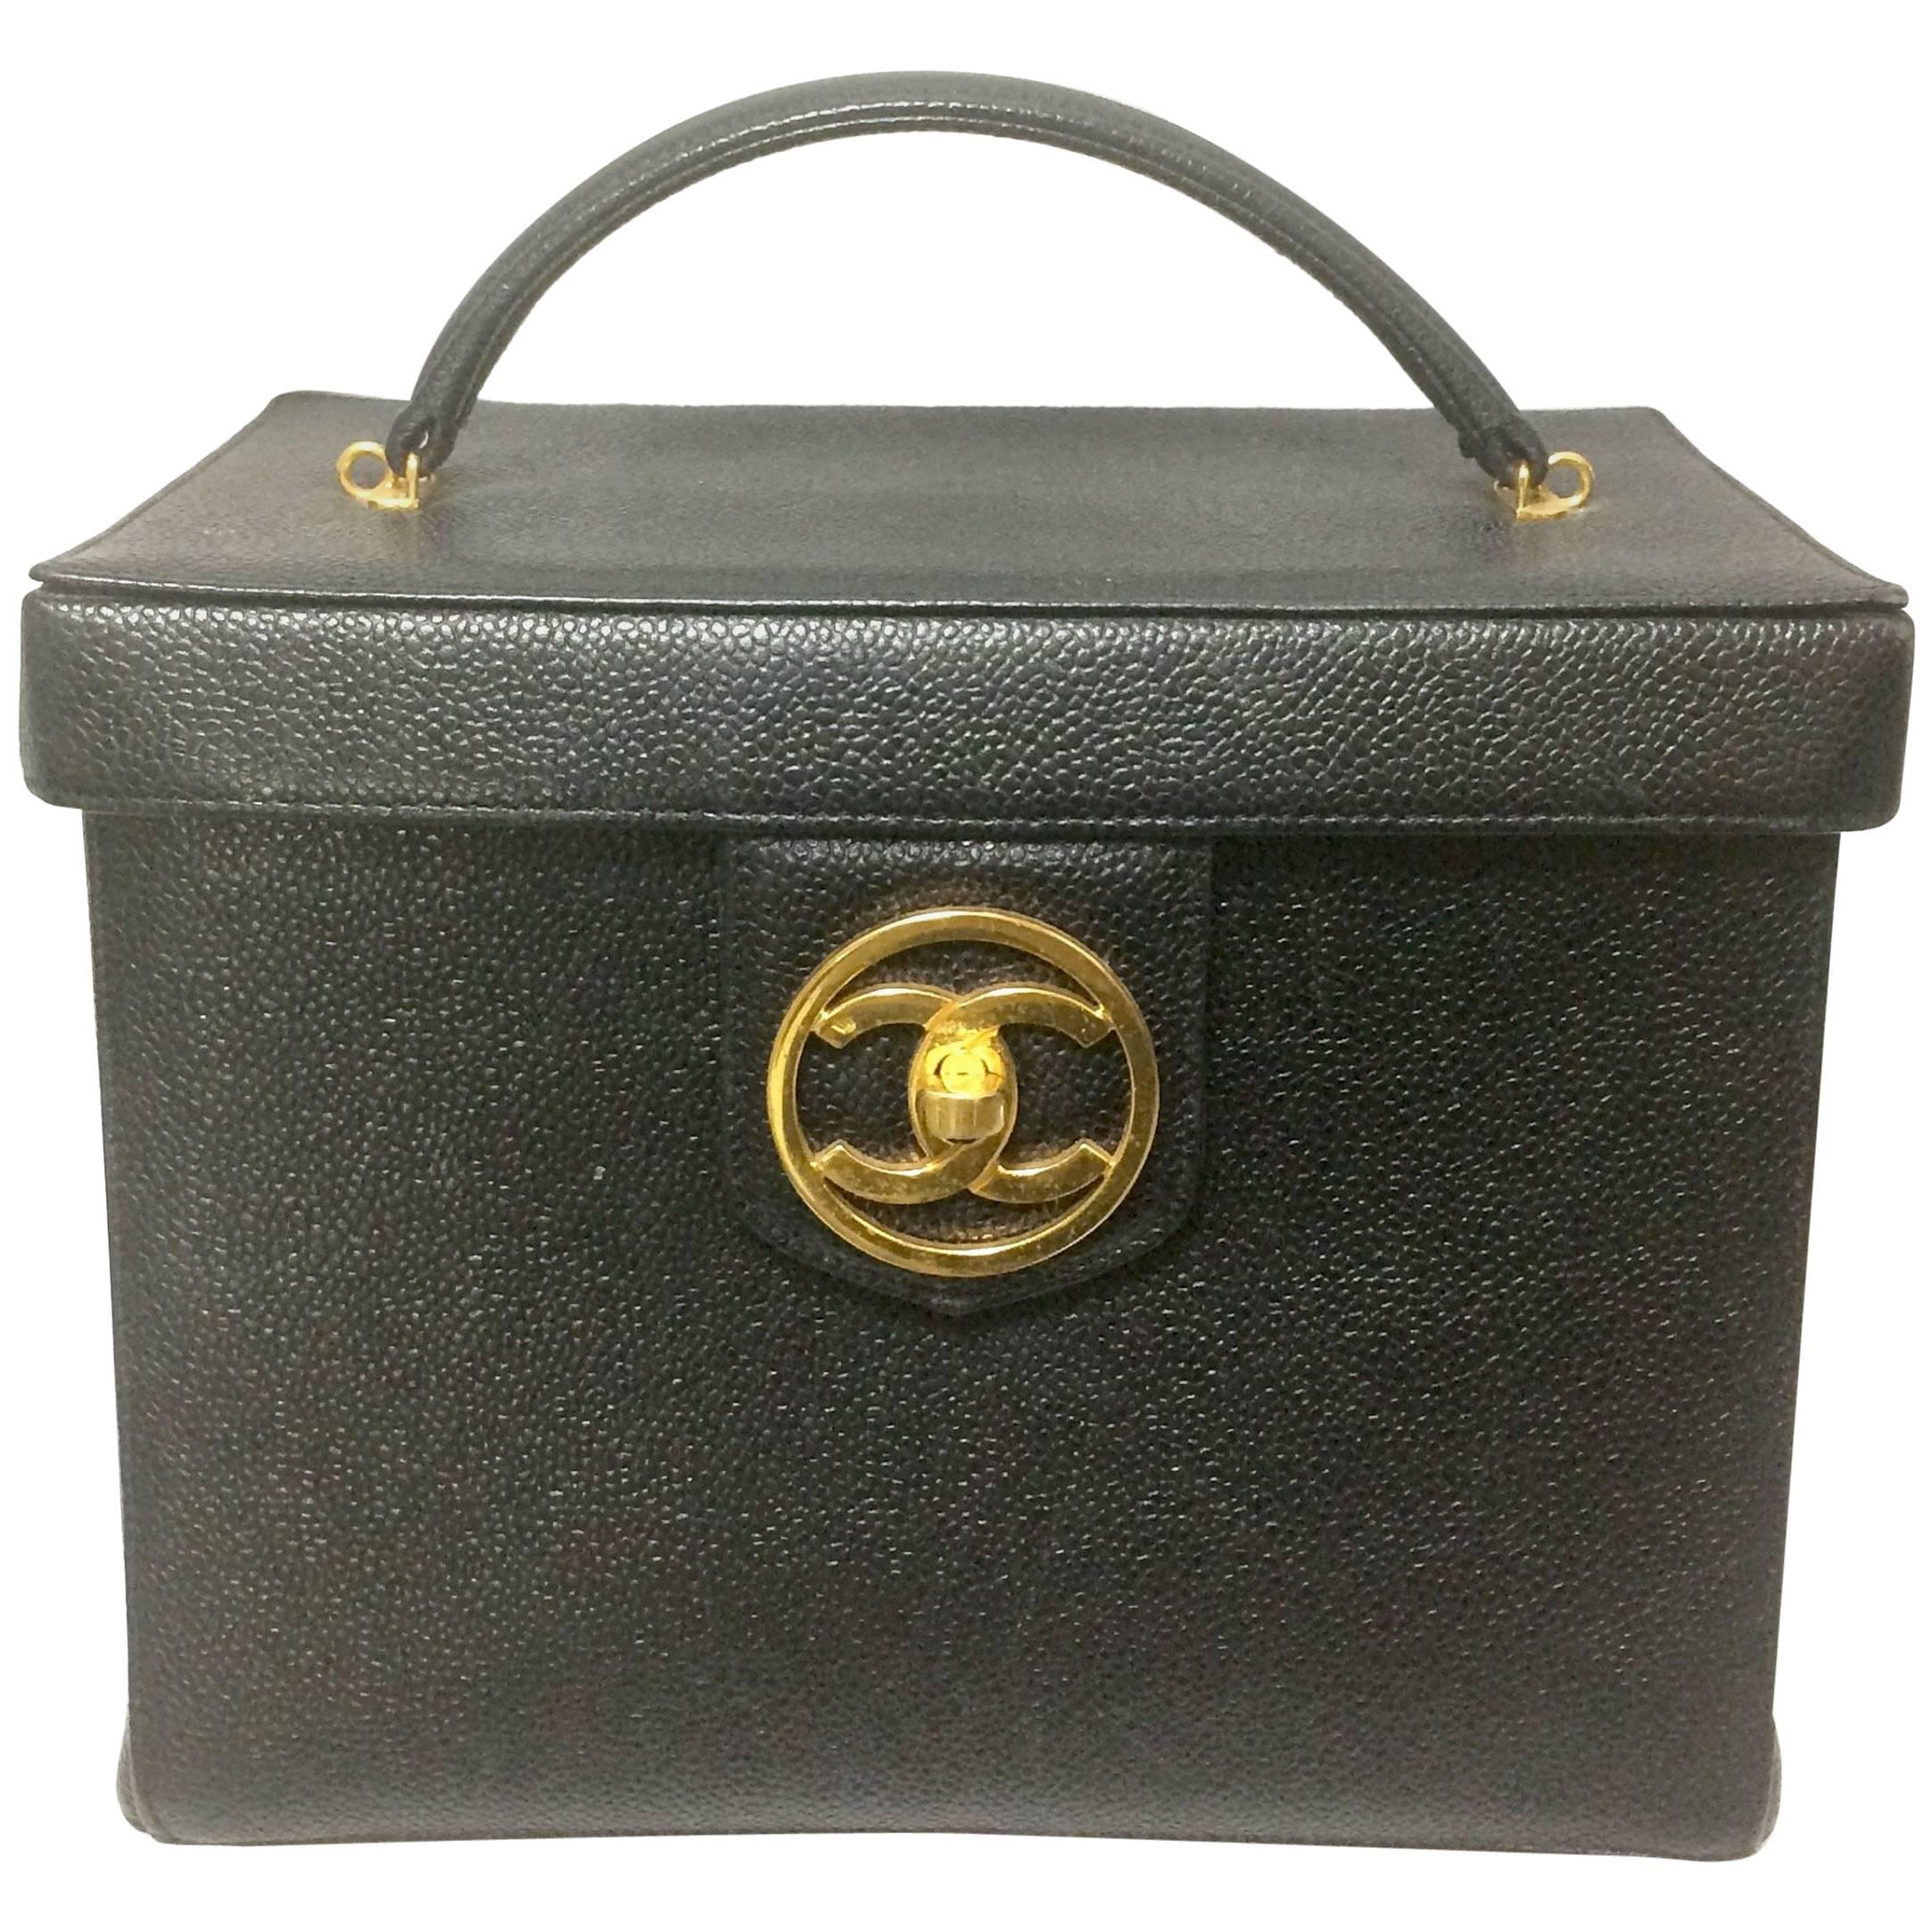 Vintage CHANEL black caviar leather large vanity purse, lunchbox style handbag.